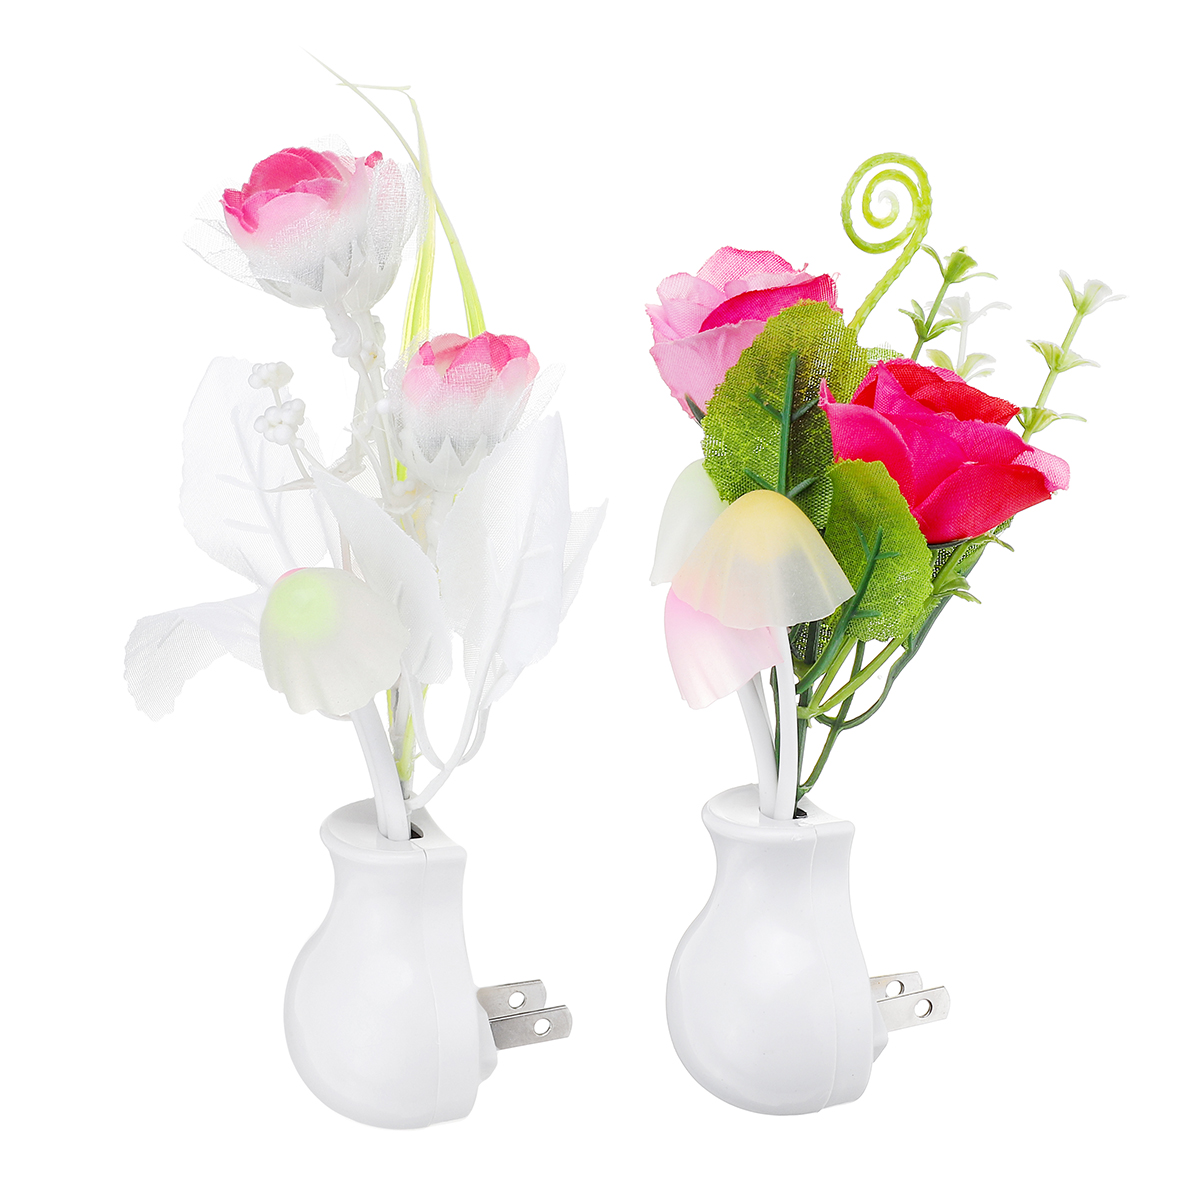 Romantic-Flower-Mushroom-LED-Night-Light-Sensor-Baby-Bed-Lamp-Decor-US-Plug-1691637-6